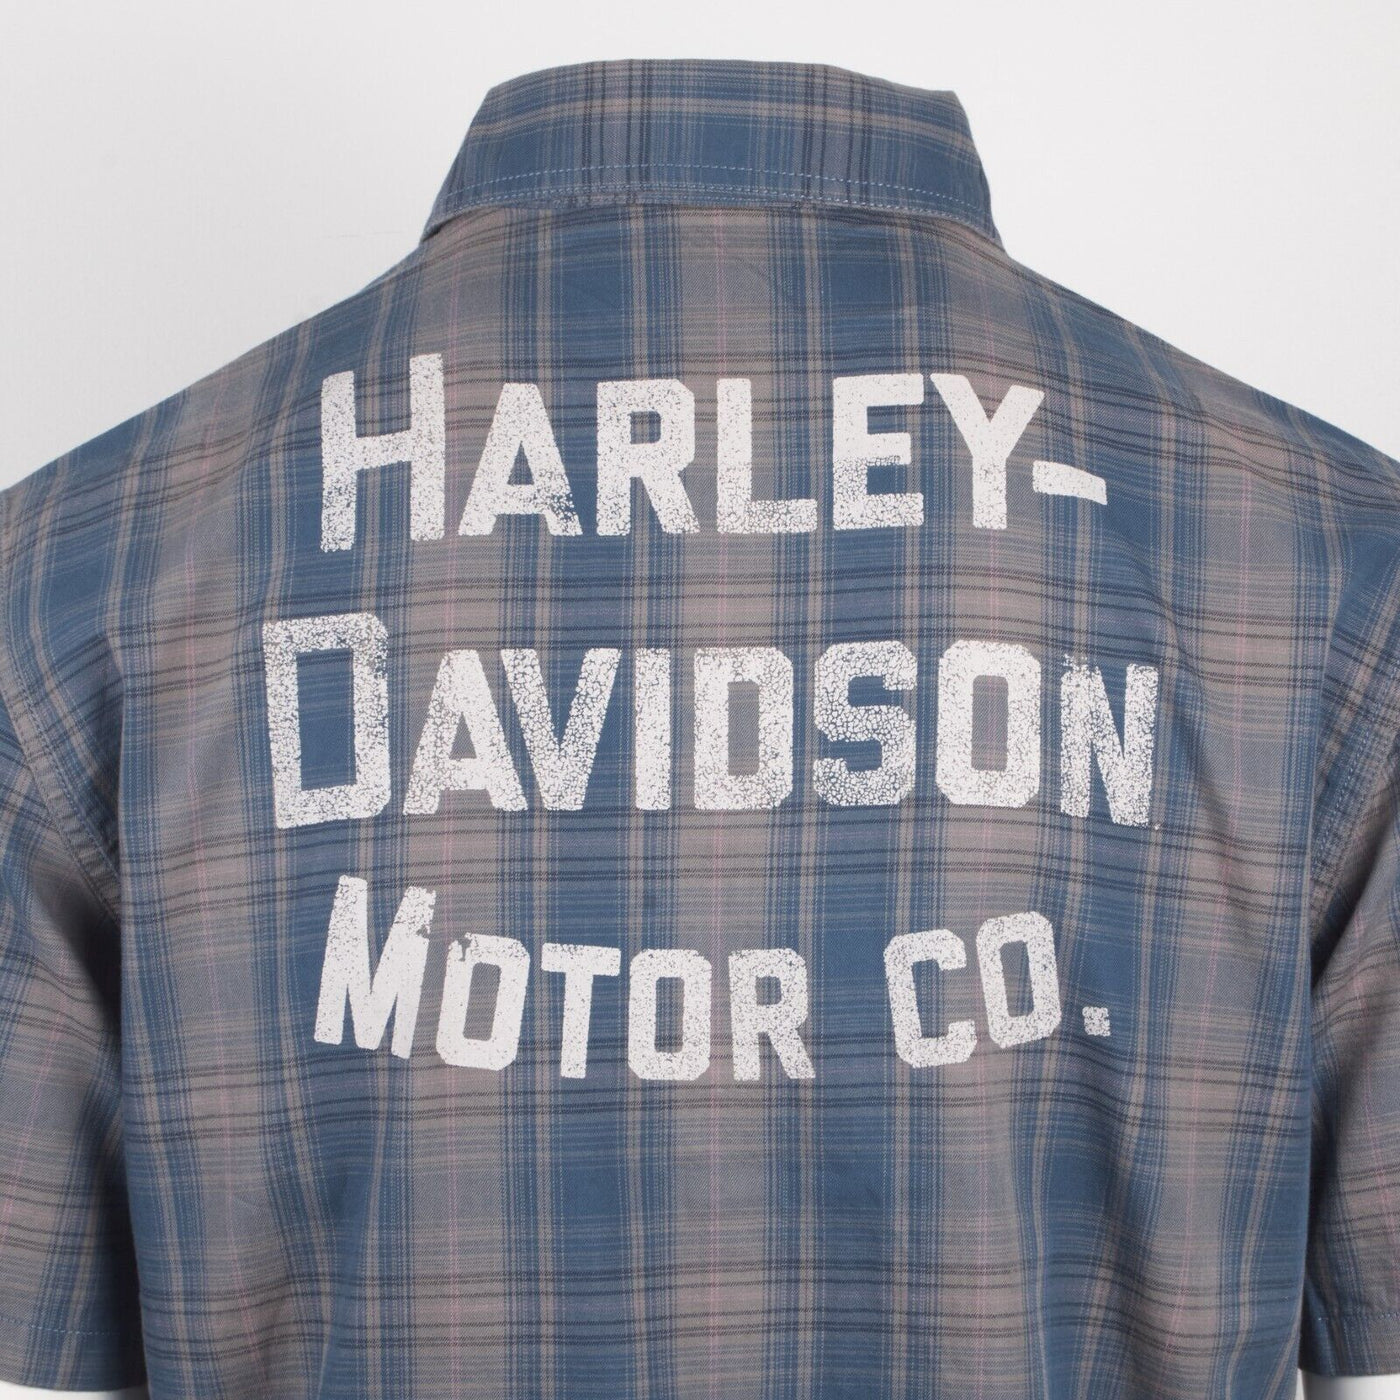 Harley-Davidson Men's Blue Grey Plaid Motor Co. Amplifier S/S Woven Shirt (S38)